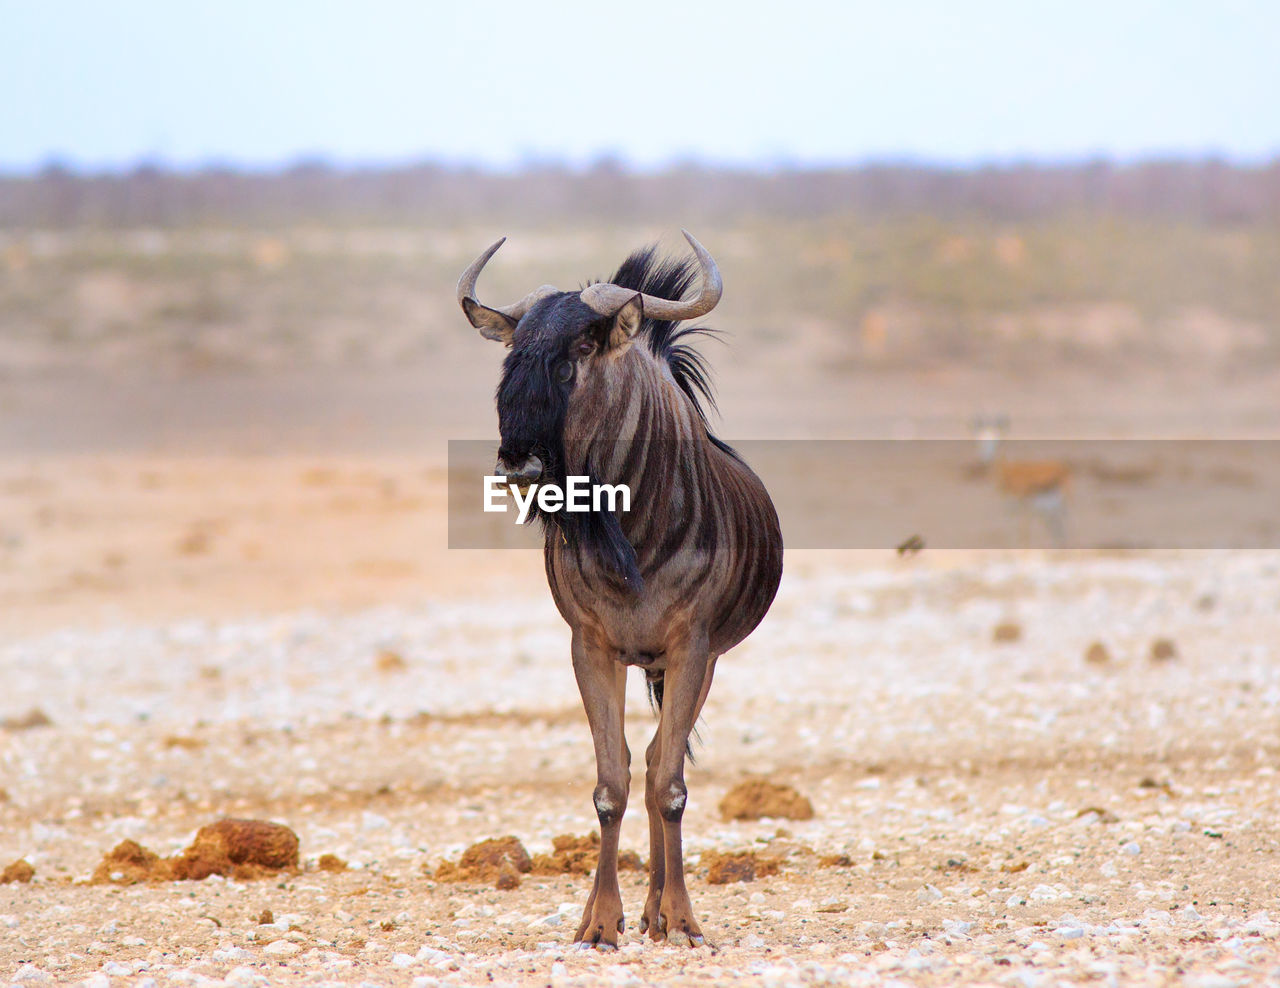 Wildebeest at etosha national park